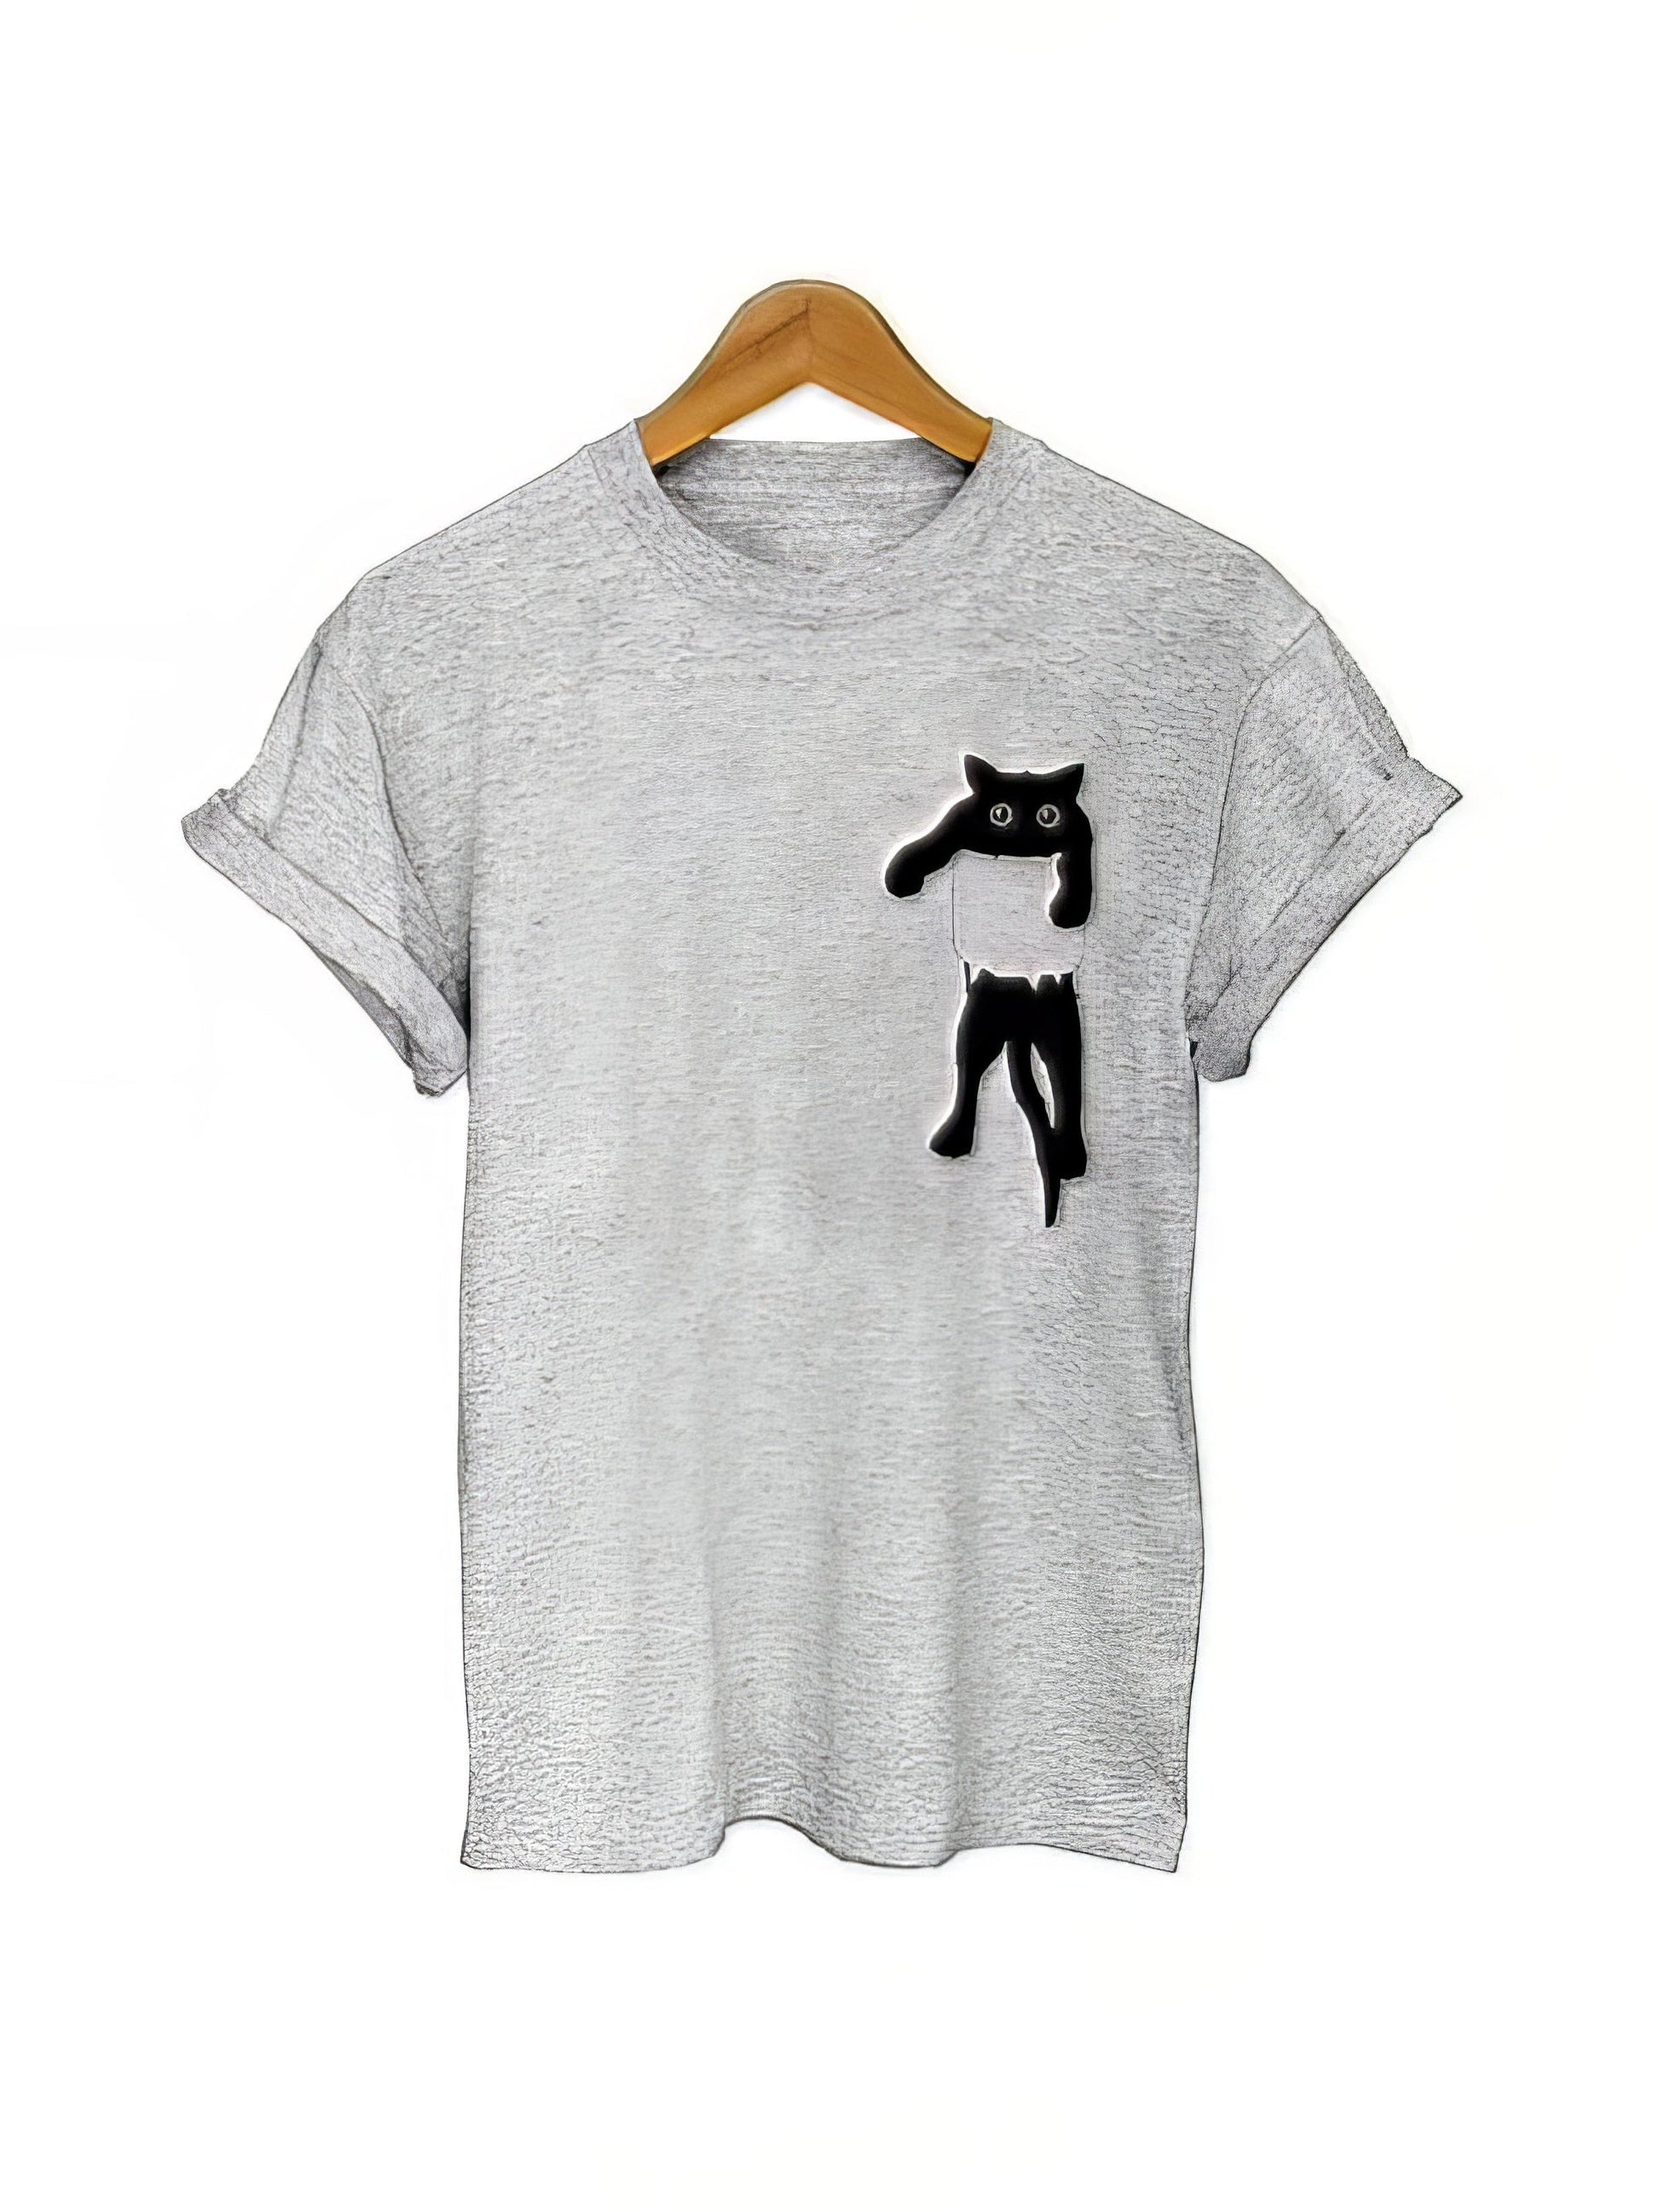 Pocket Cat T-shirt Women's Cute Black Kitty TSH210326328GRAS Gray / 2 (S)